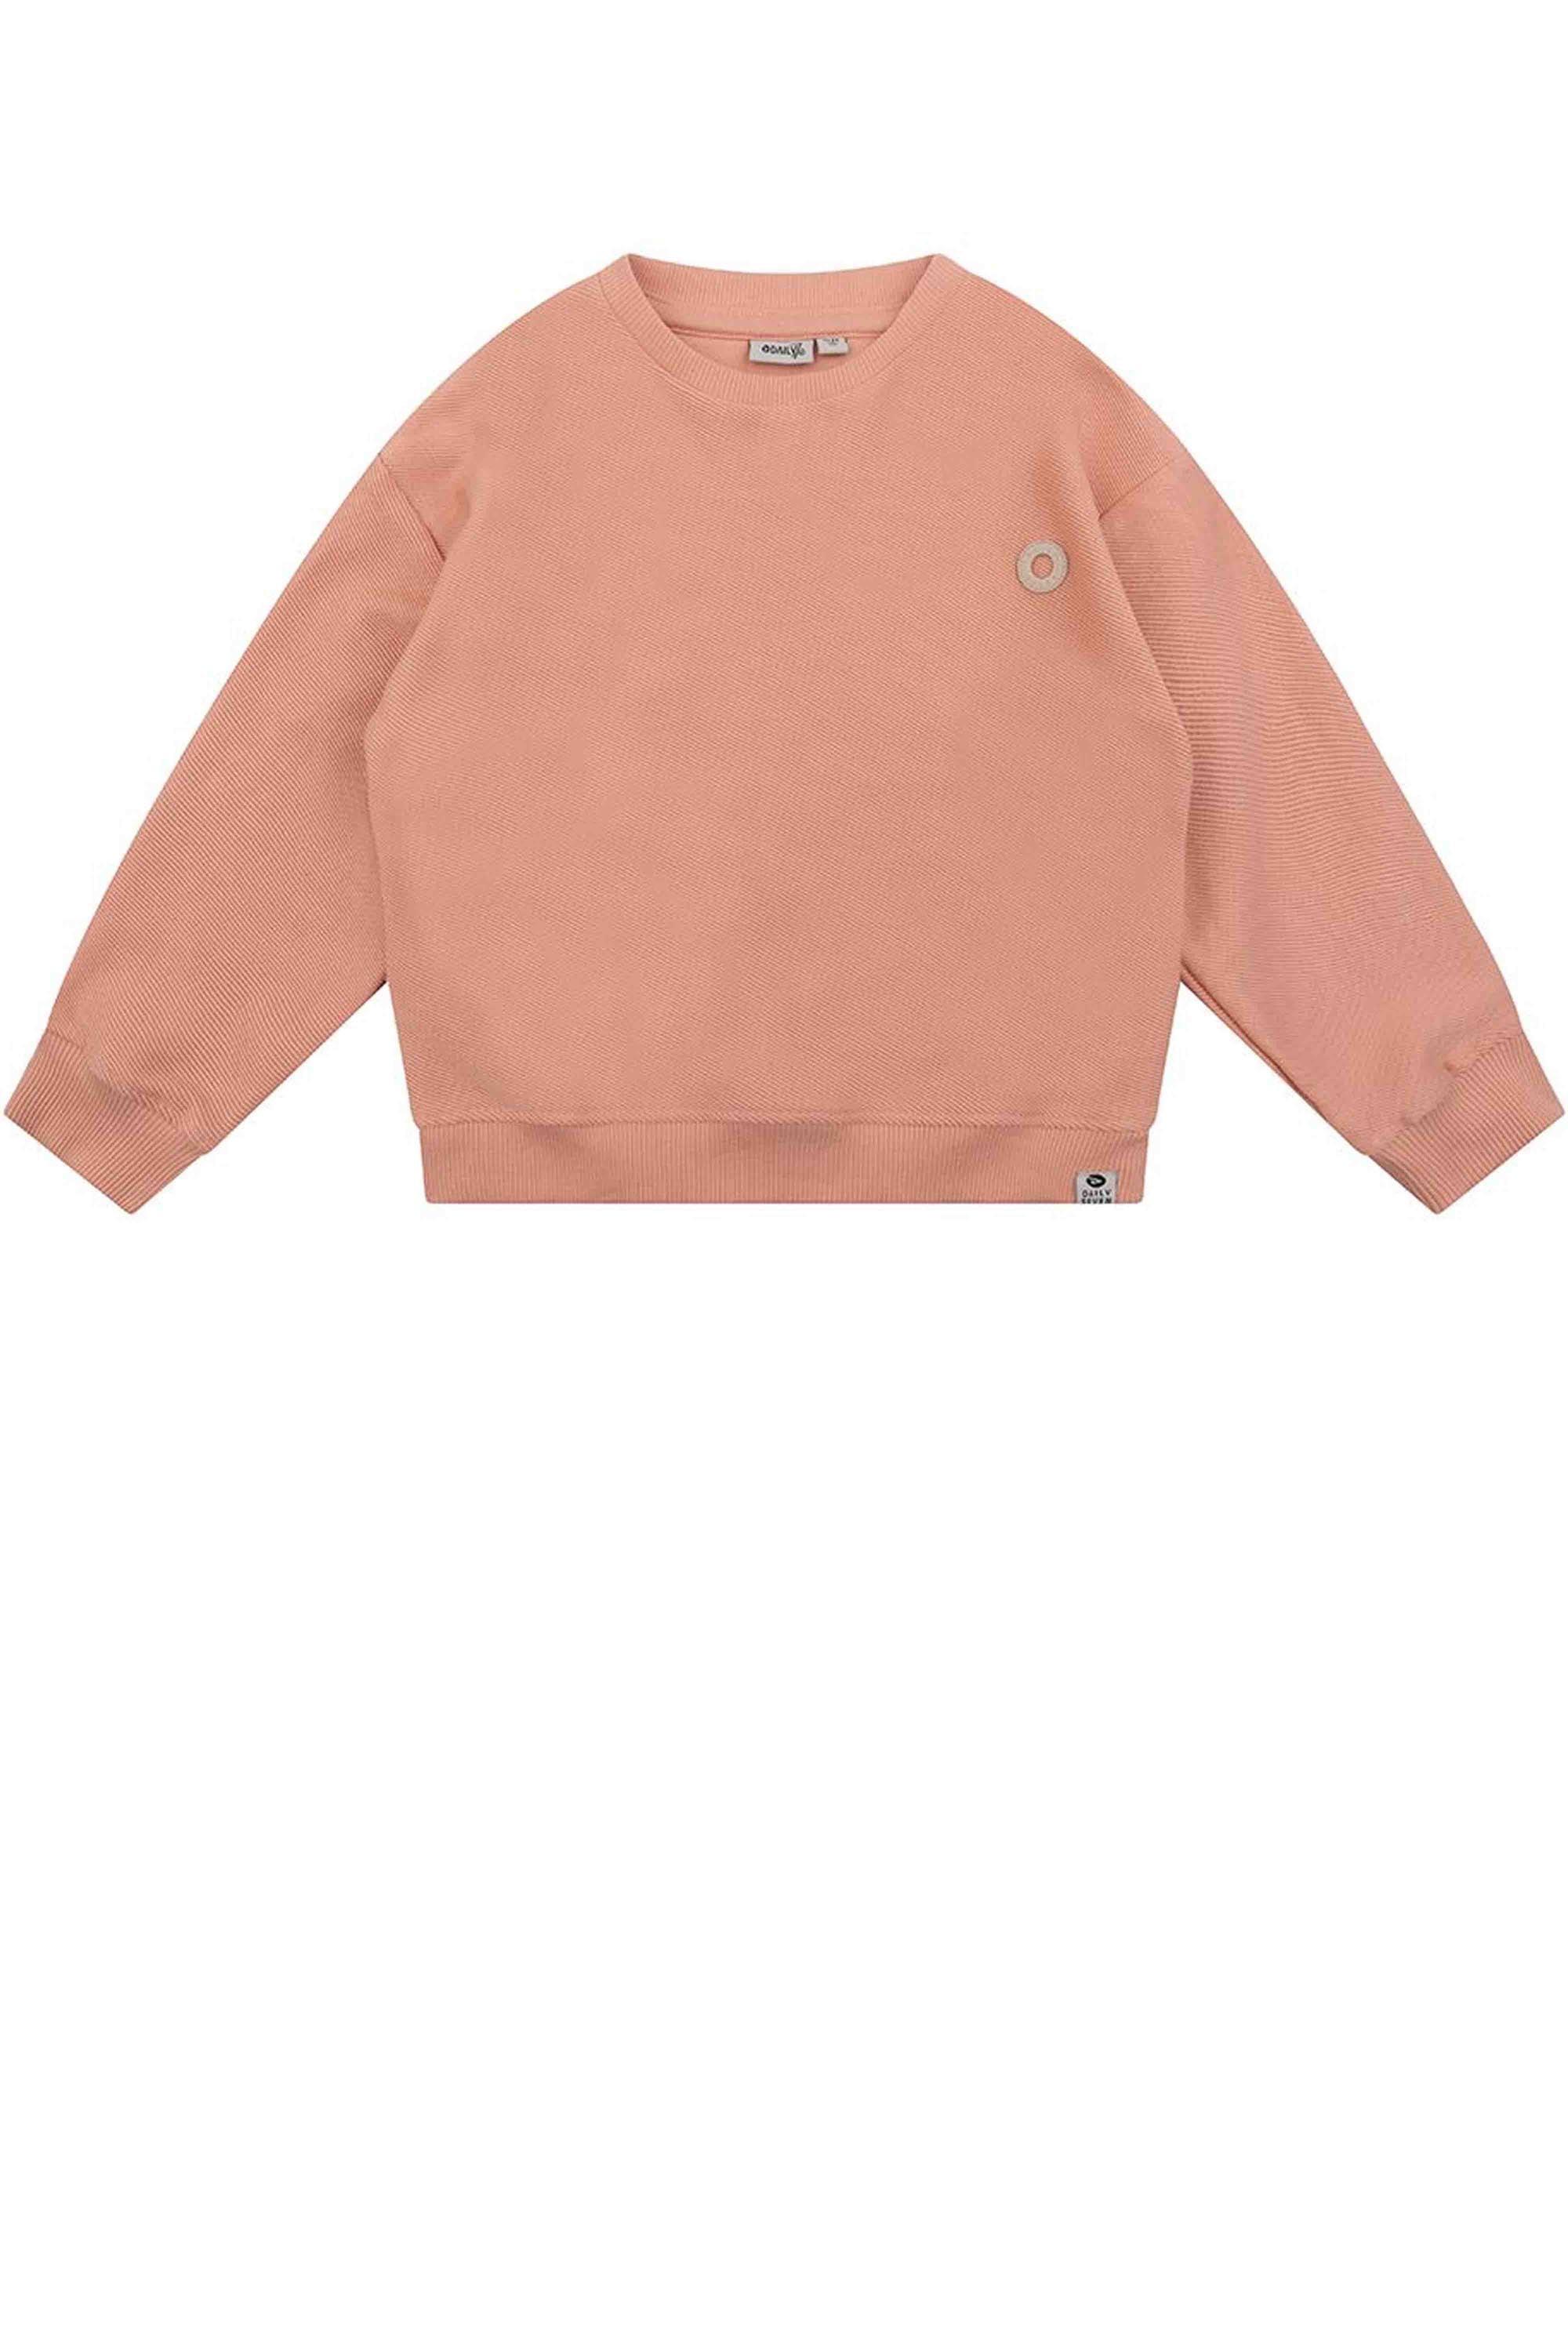 Sweater - Ko&Flo